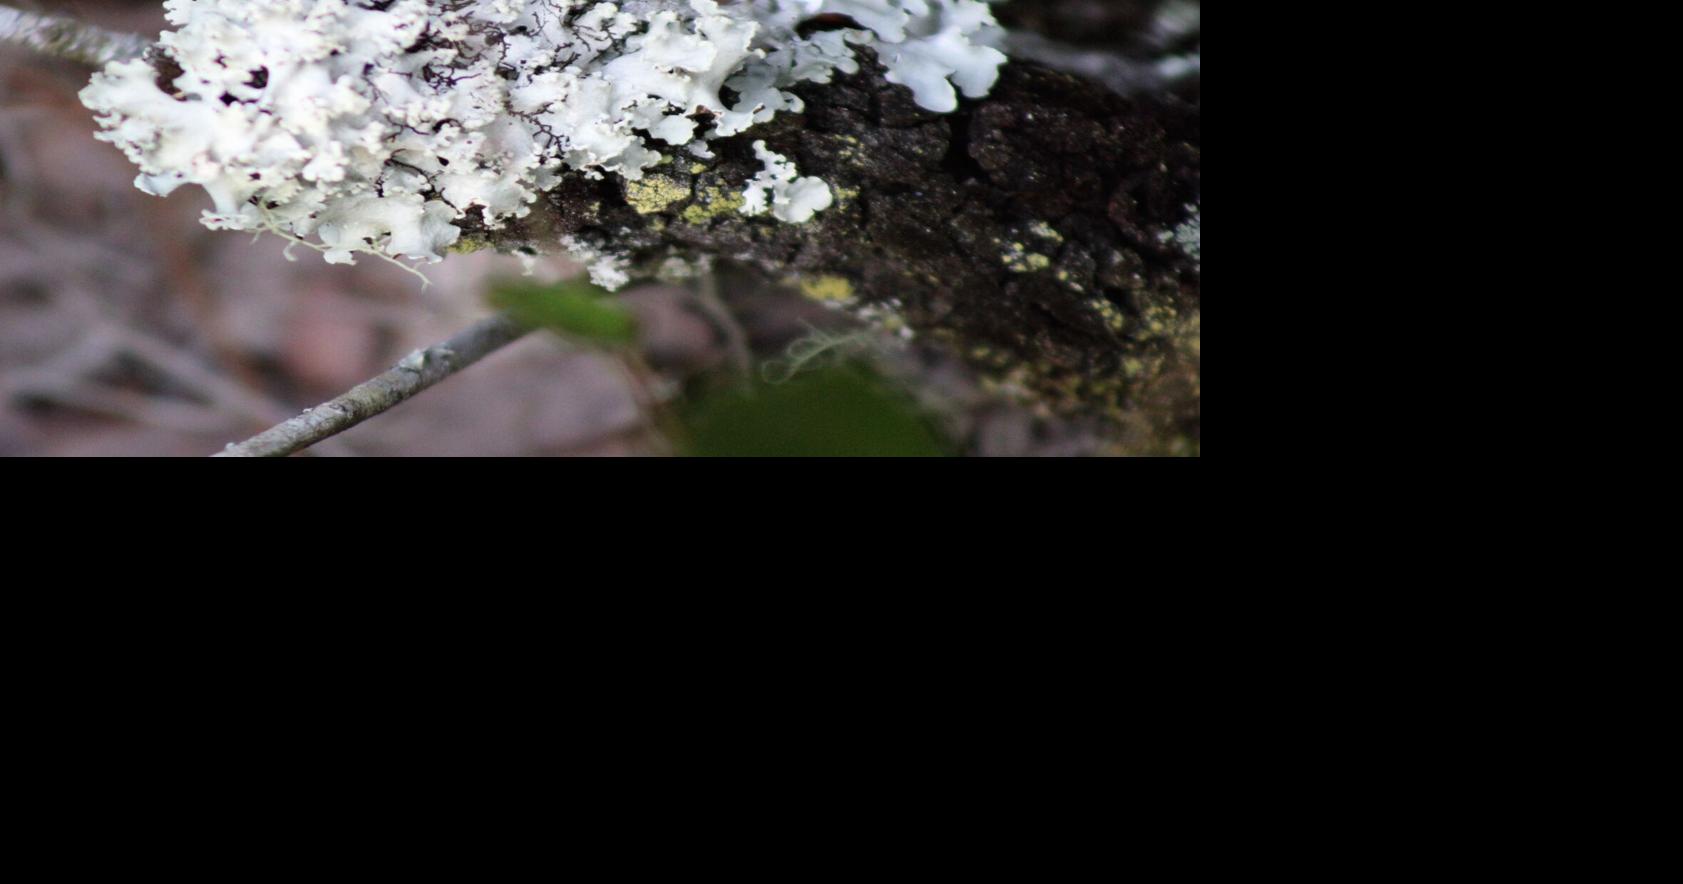 peculiar flower photo & image  plants, fungi & lichens, flowers